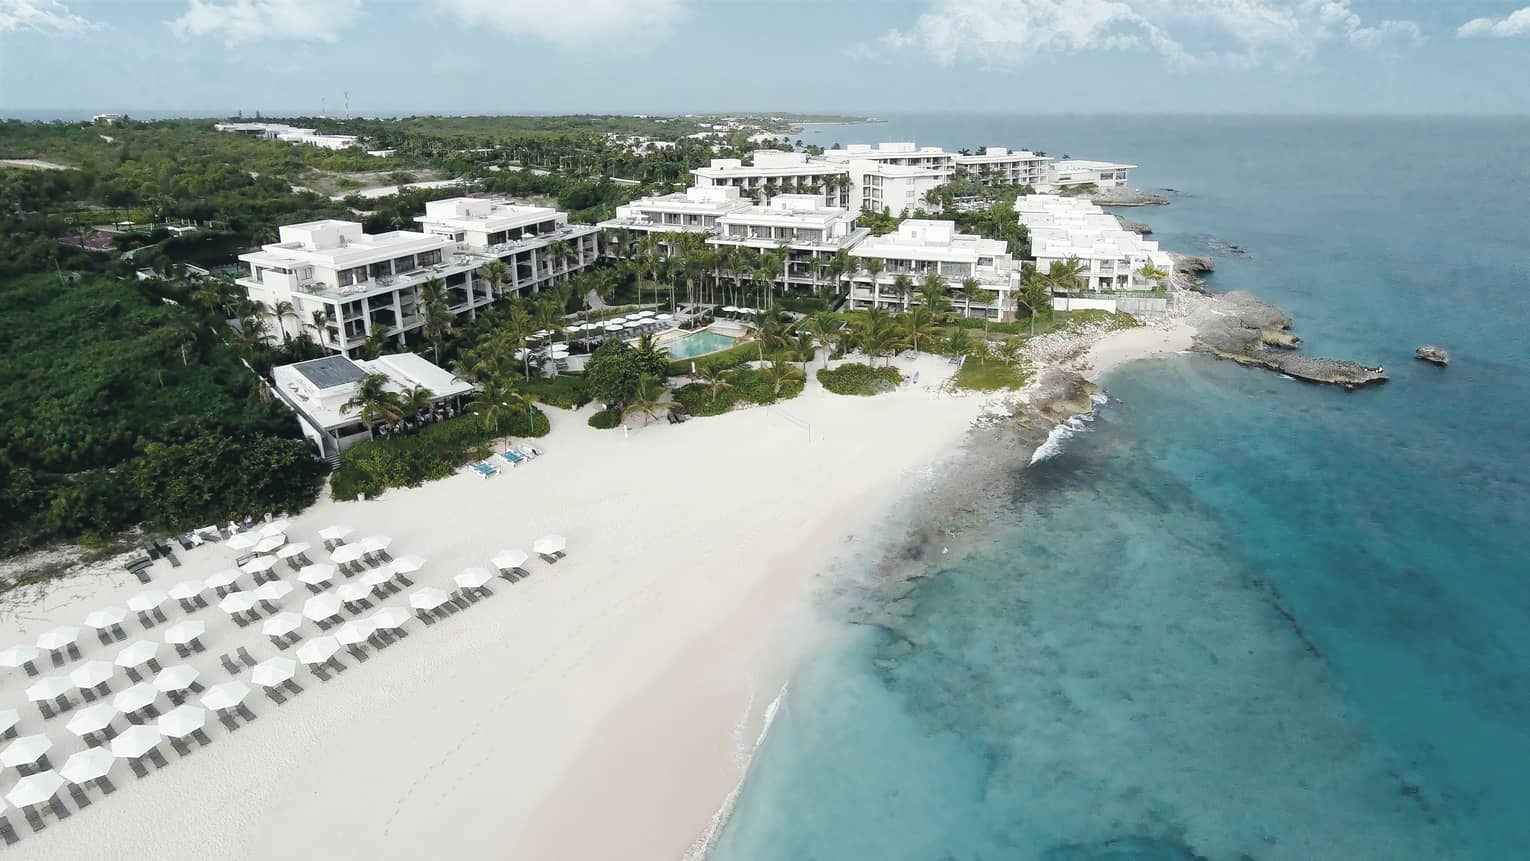 Aerial view of Four Seasons Anguilla resort on white sand beach, turquoise lagoon